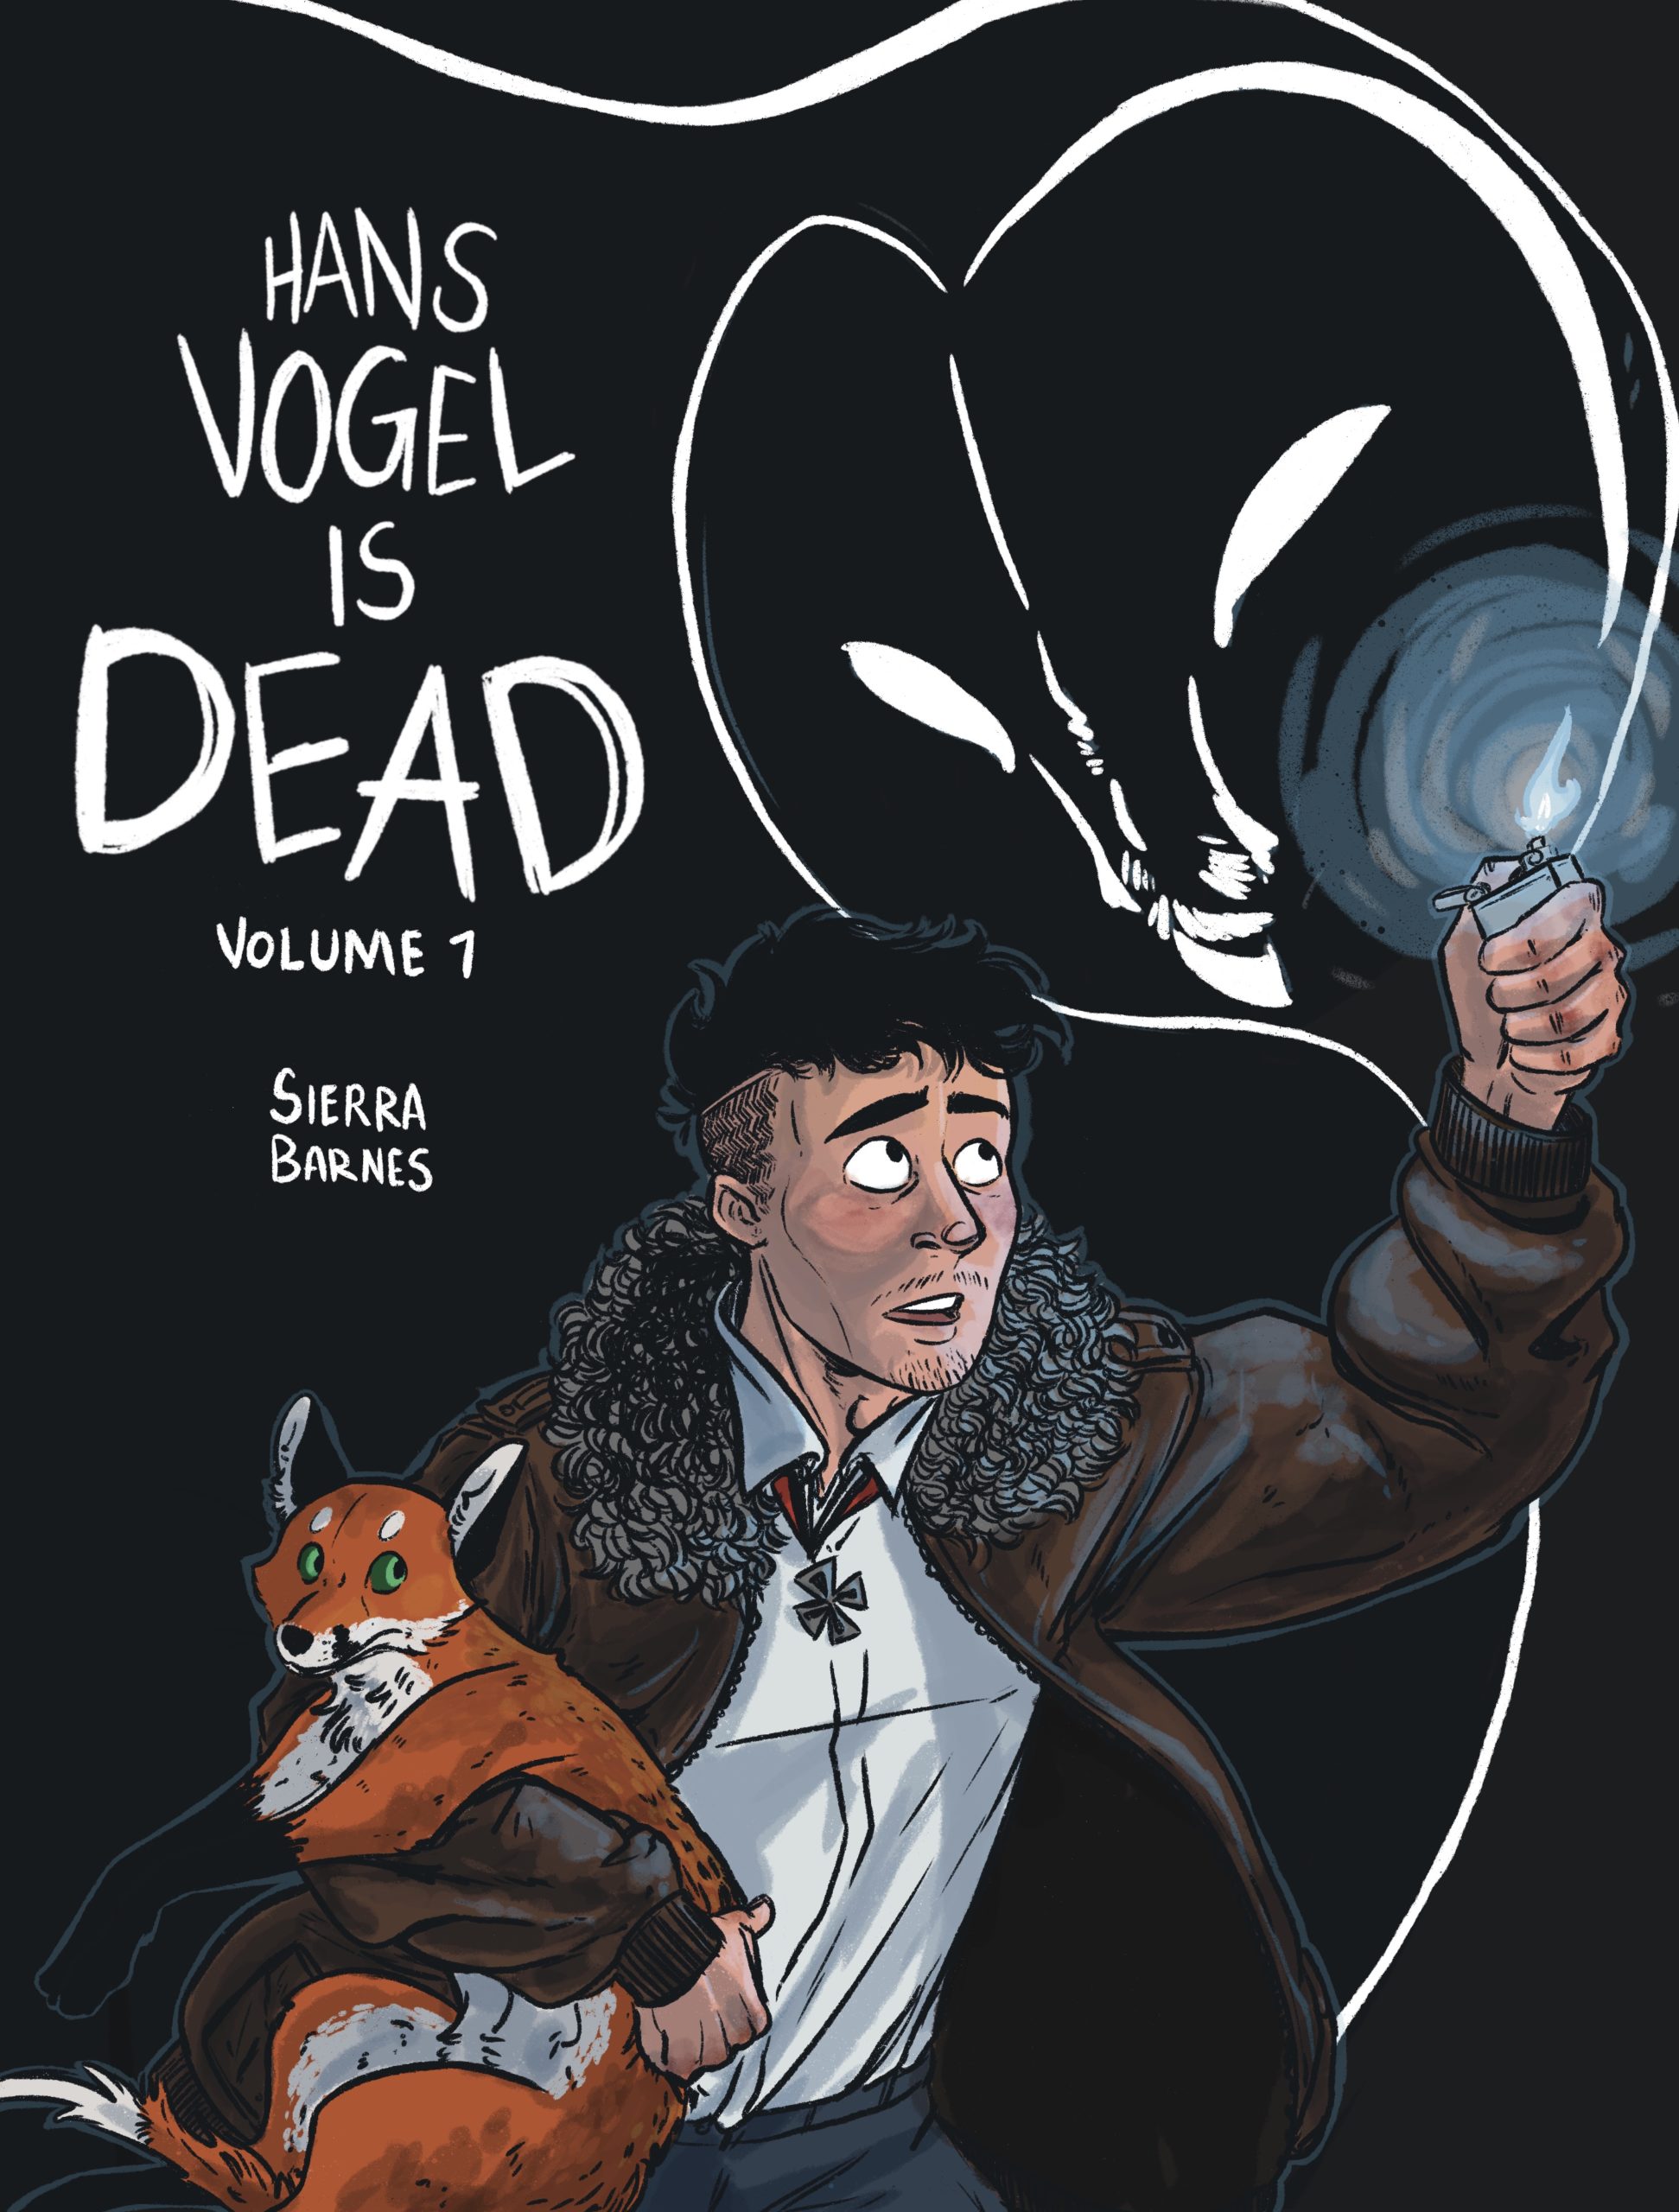 Hans Vogel is Dead Vol 1 Cover